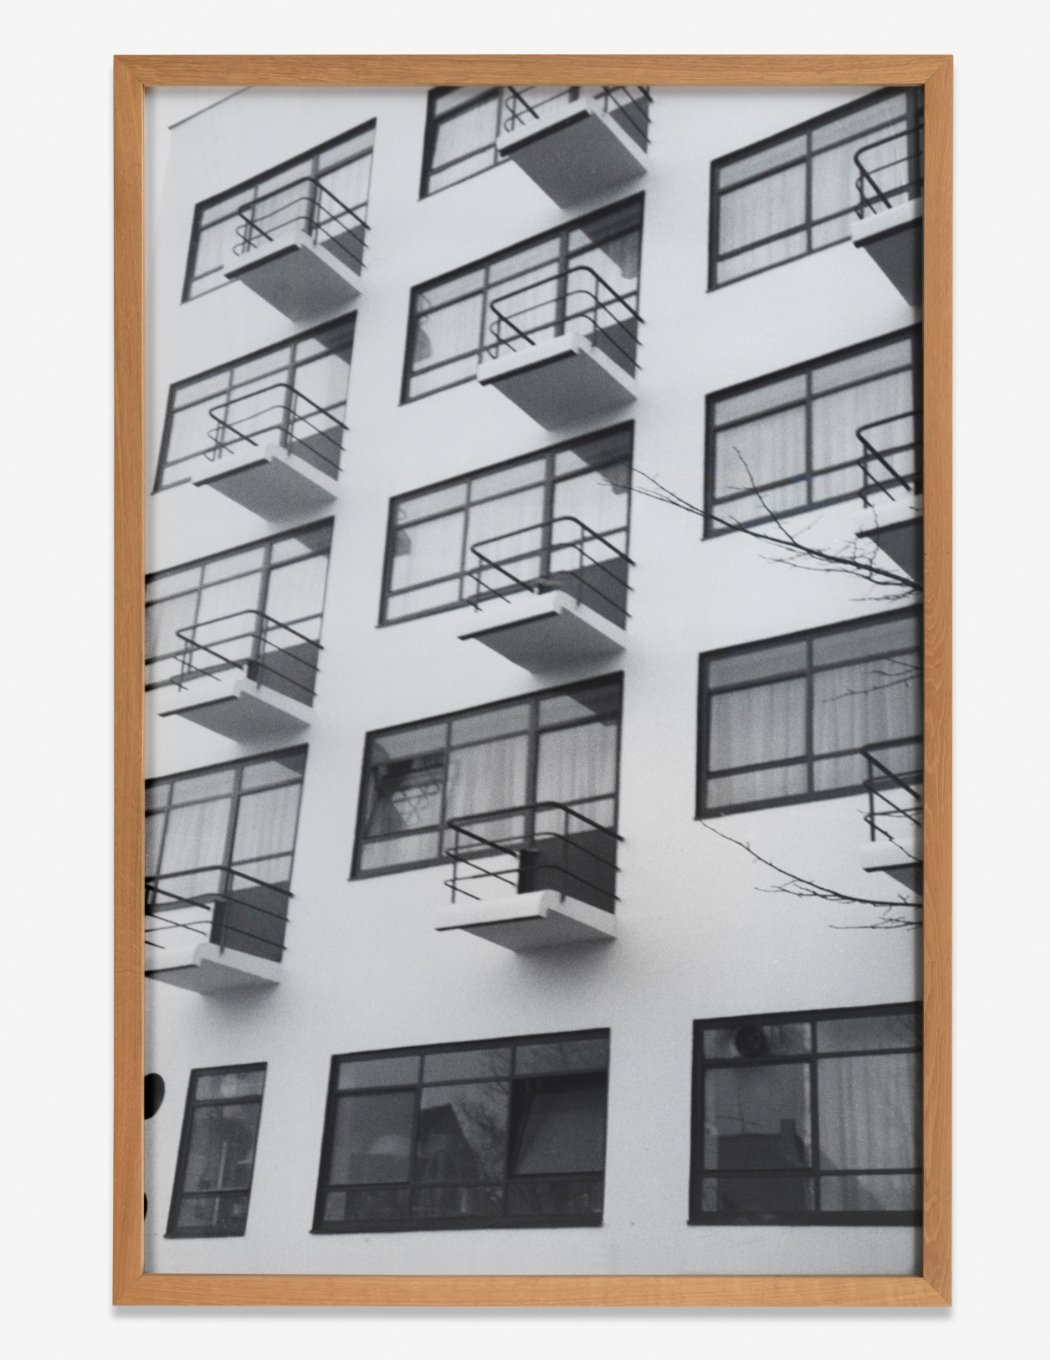  Günther Förg  Bauhaus  (1991) Baryta print, in artist’s frame 186.3 x 126.3 x 5.4 cm.; 73 3/8 x 49 3/4 x 2 1/8 in. Photo: Serge Hasenböhler 